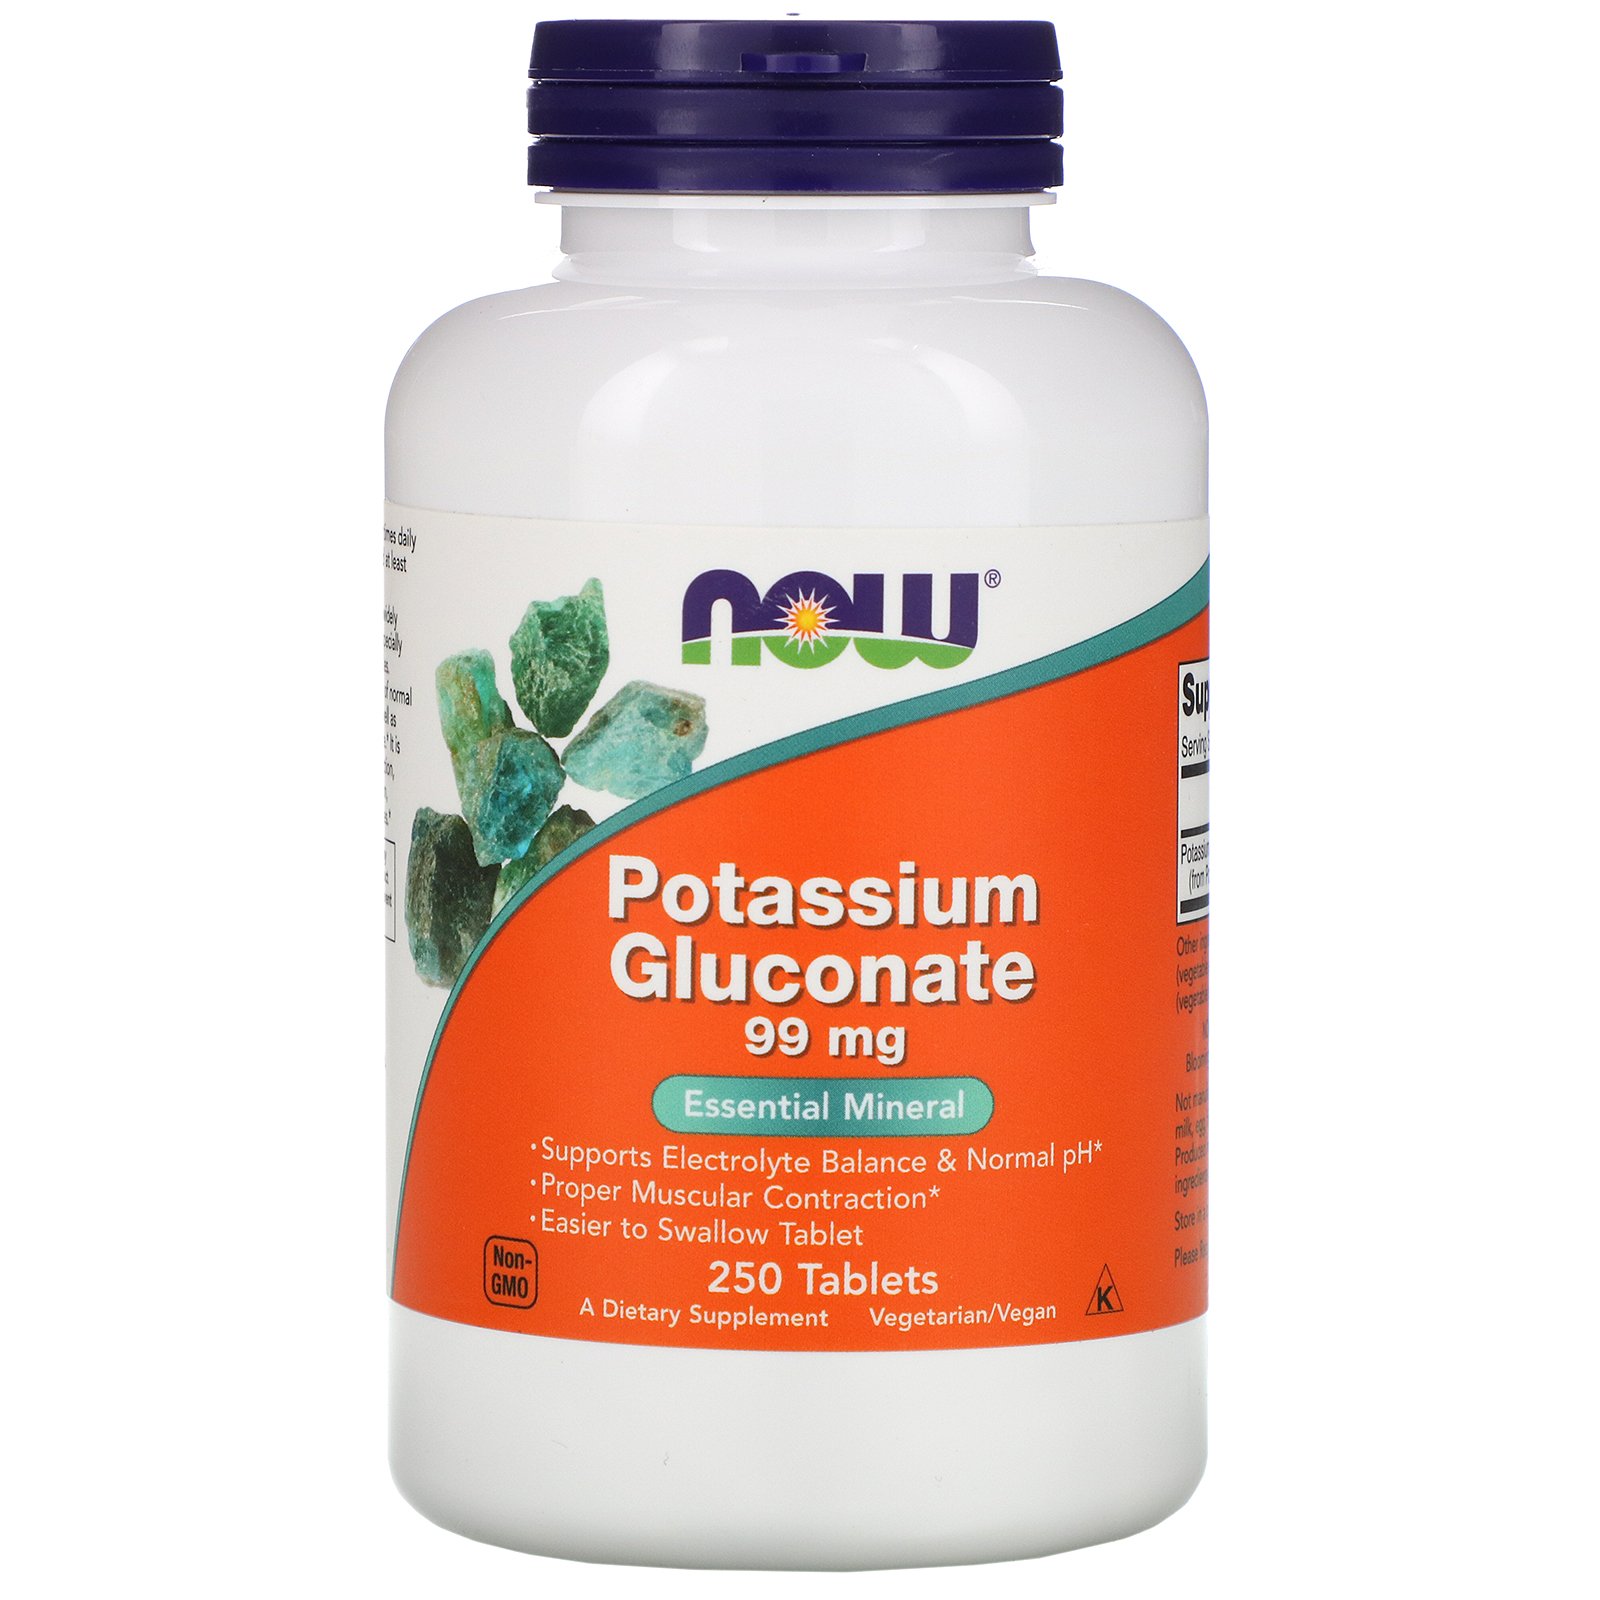 Potassium Gluconate, Калий Глюконат 99 мг - 250 таблеток